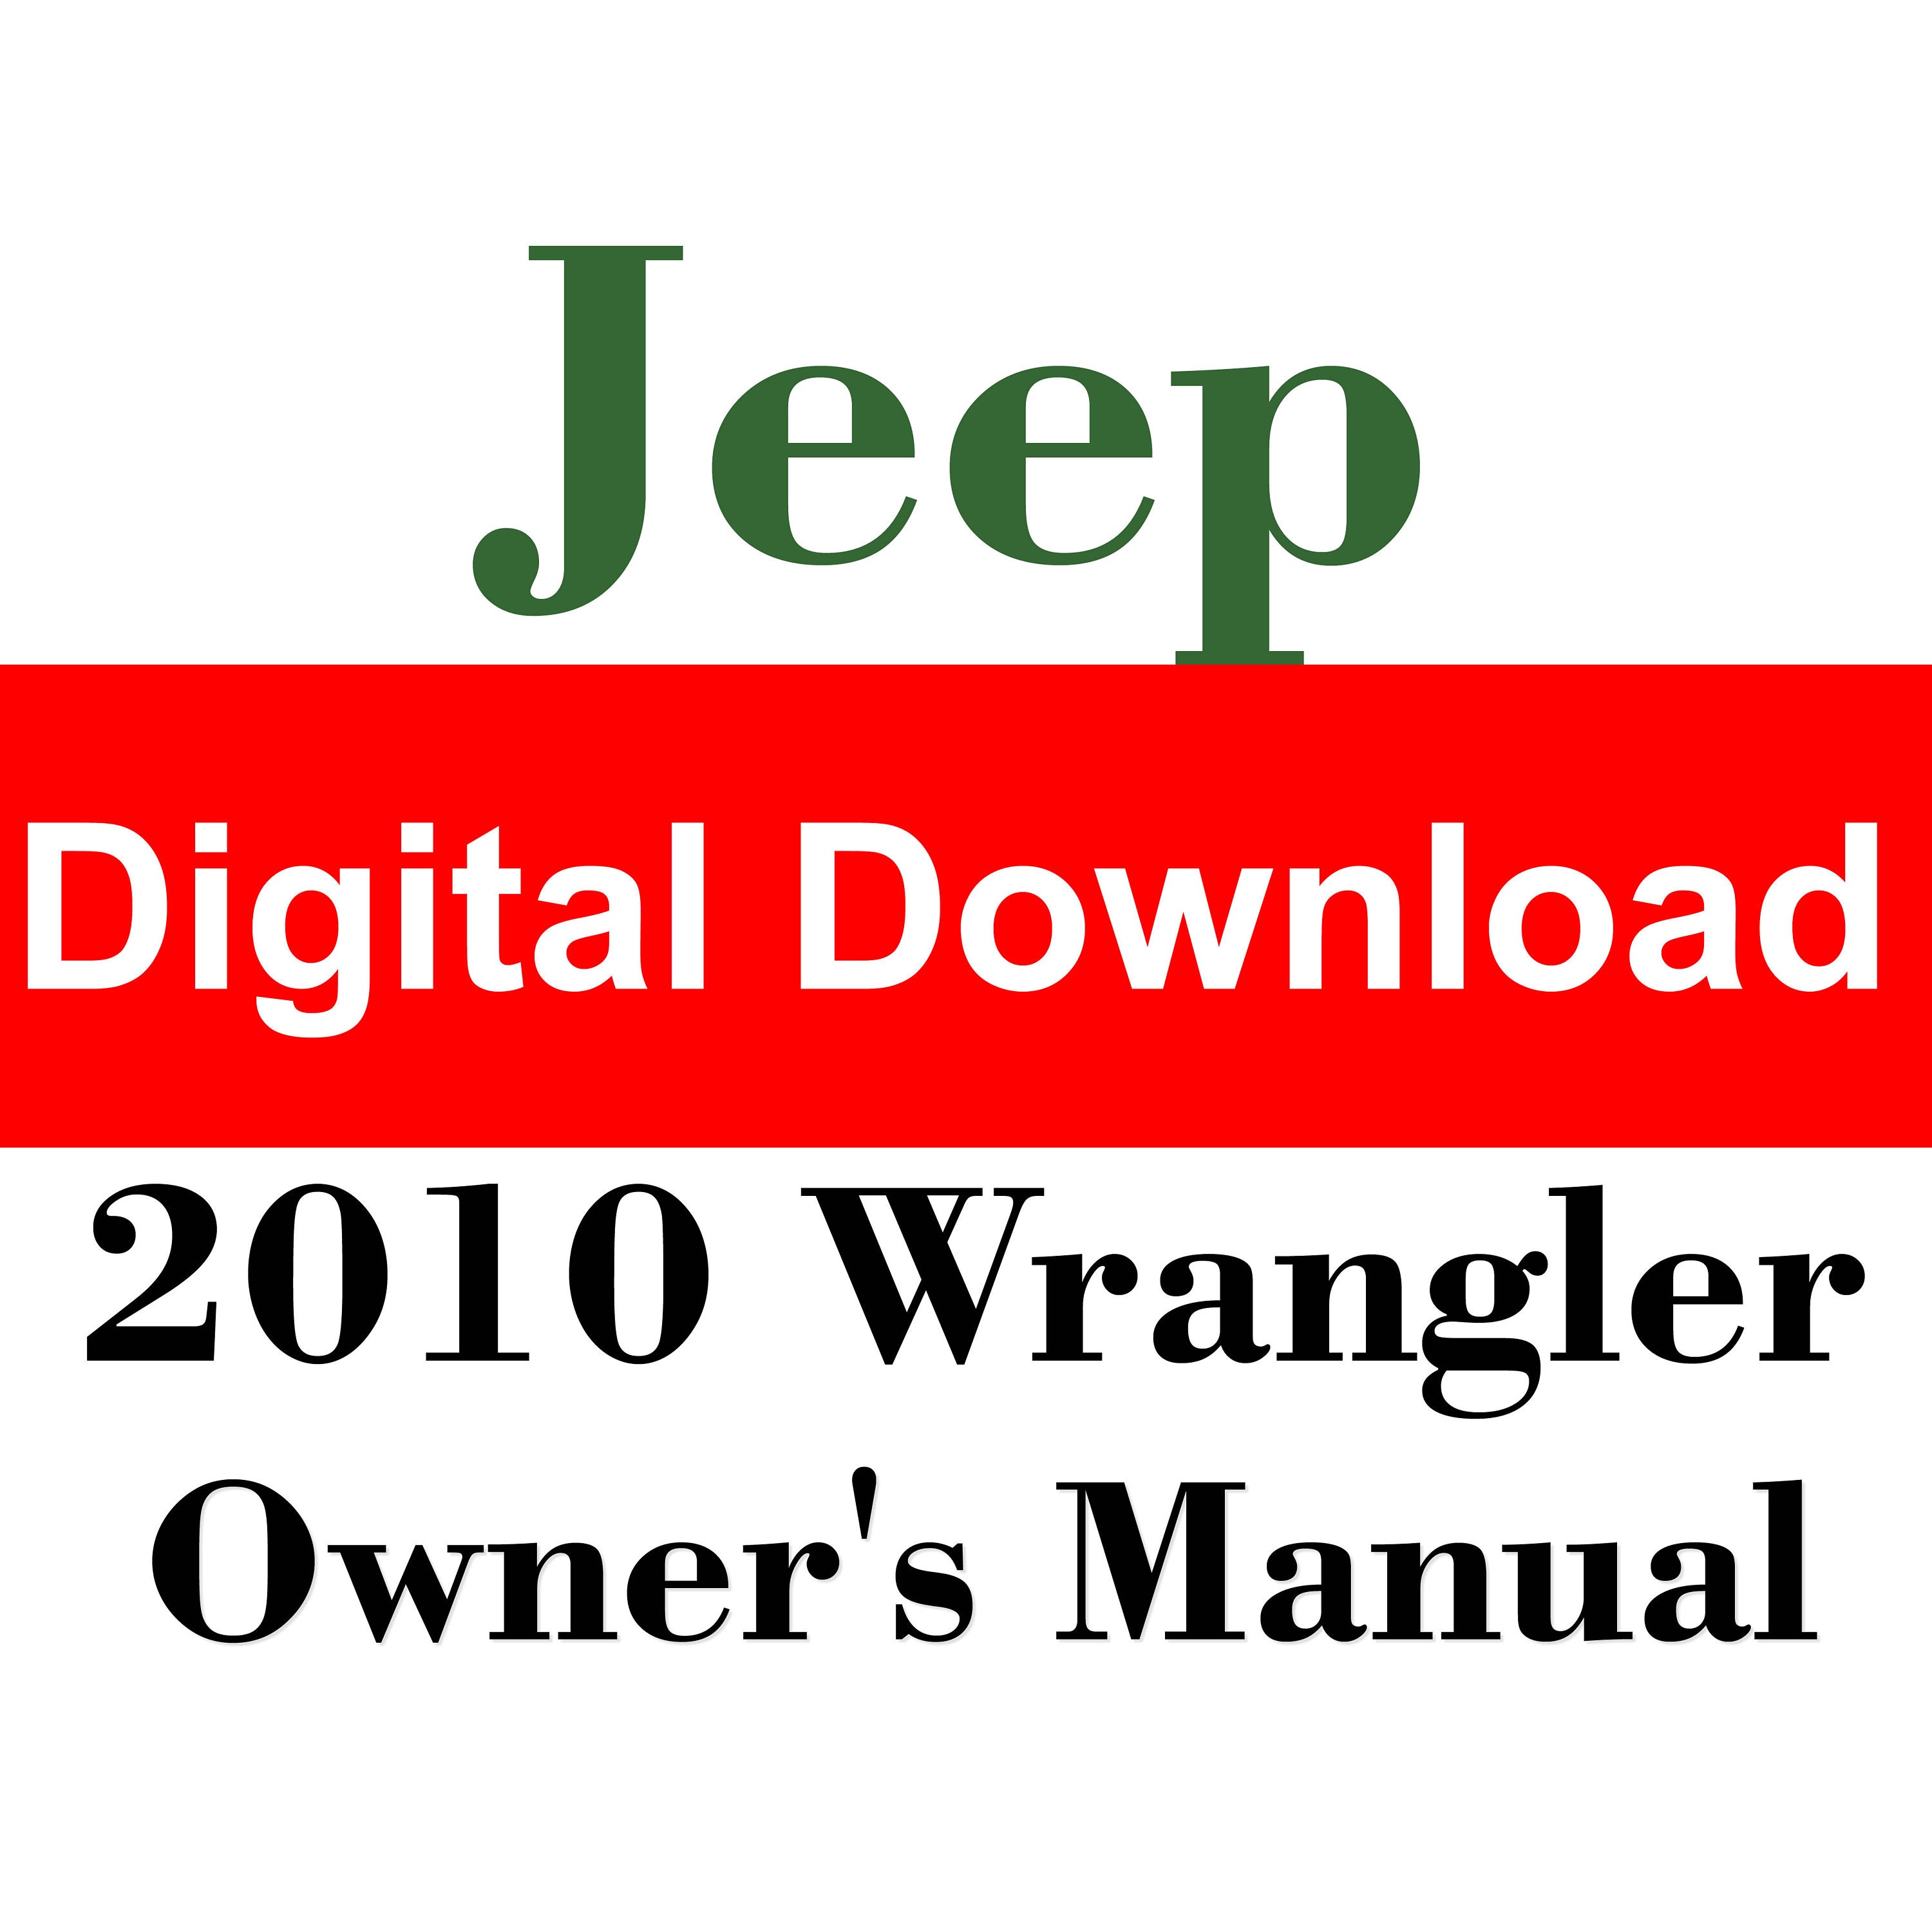 2010 Jeep Wrangler Owners Manual PDF Digital Download - Etsy Australia